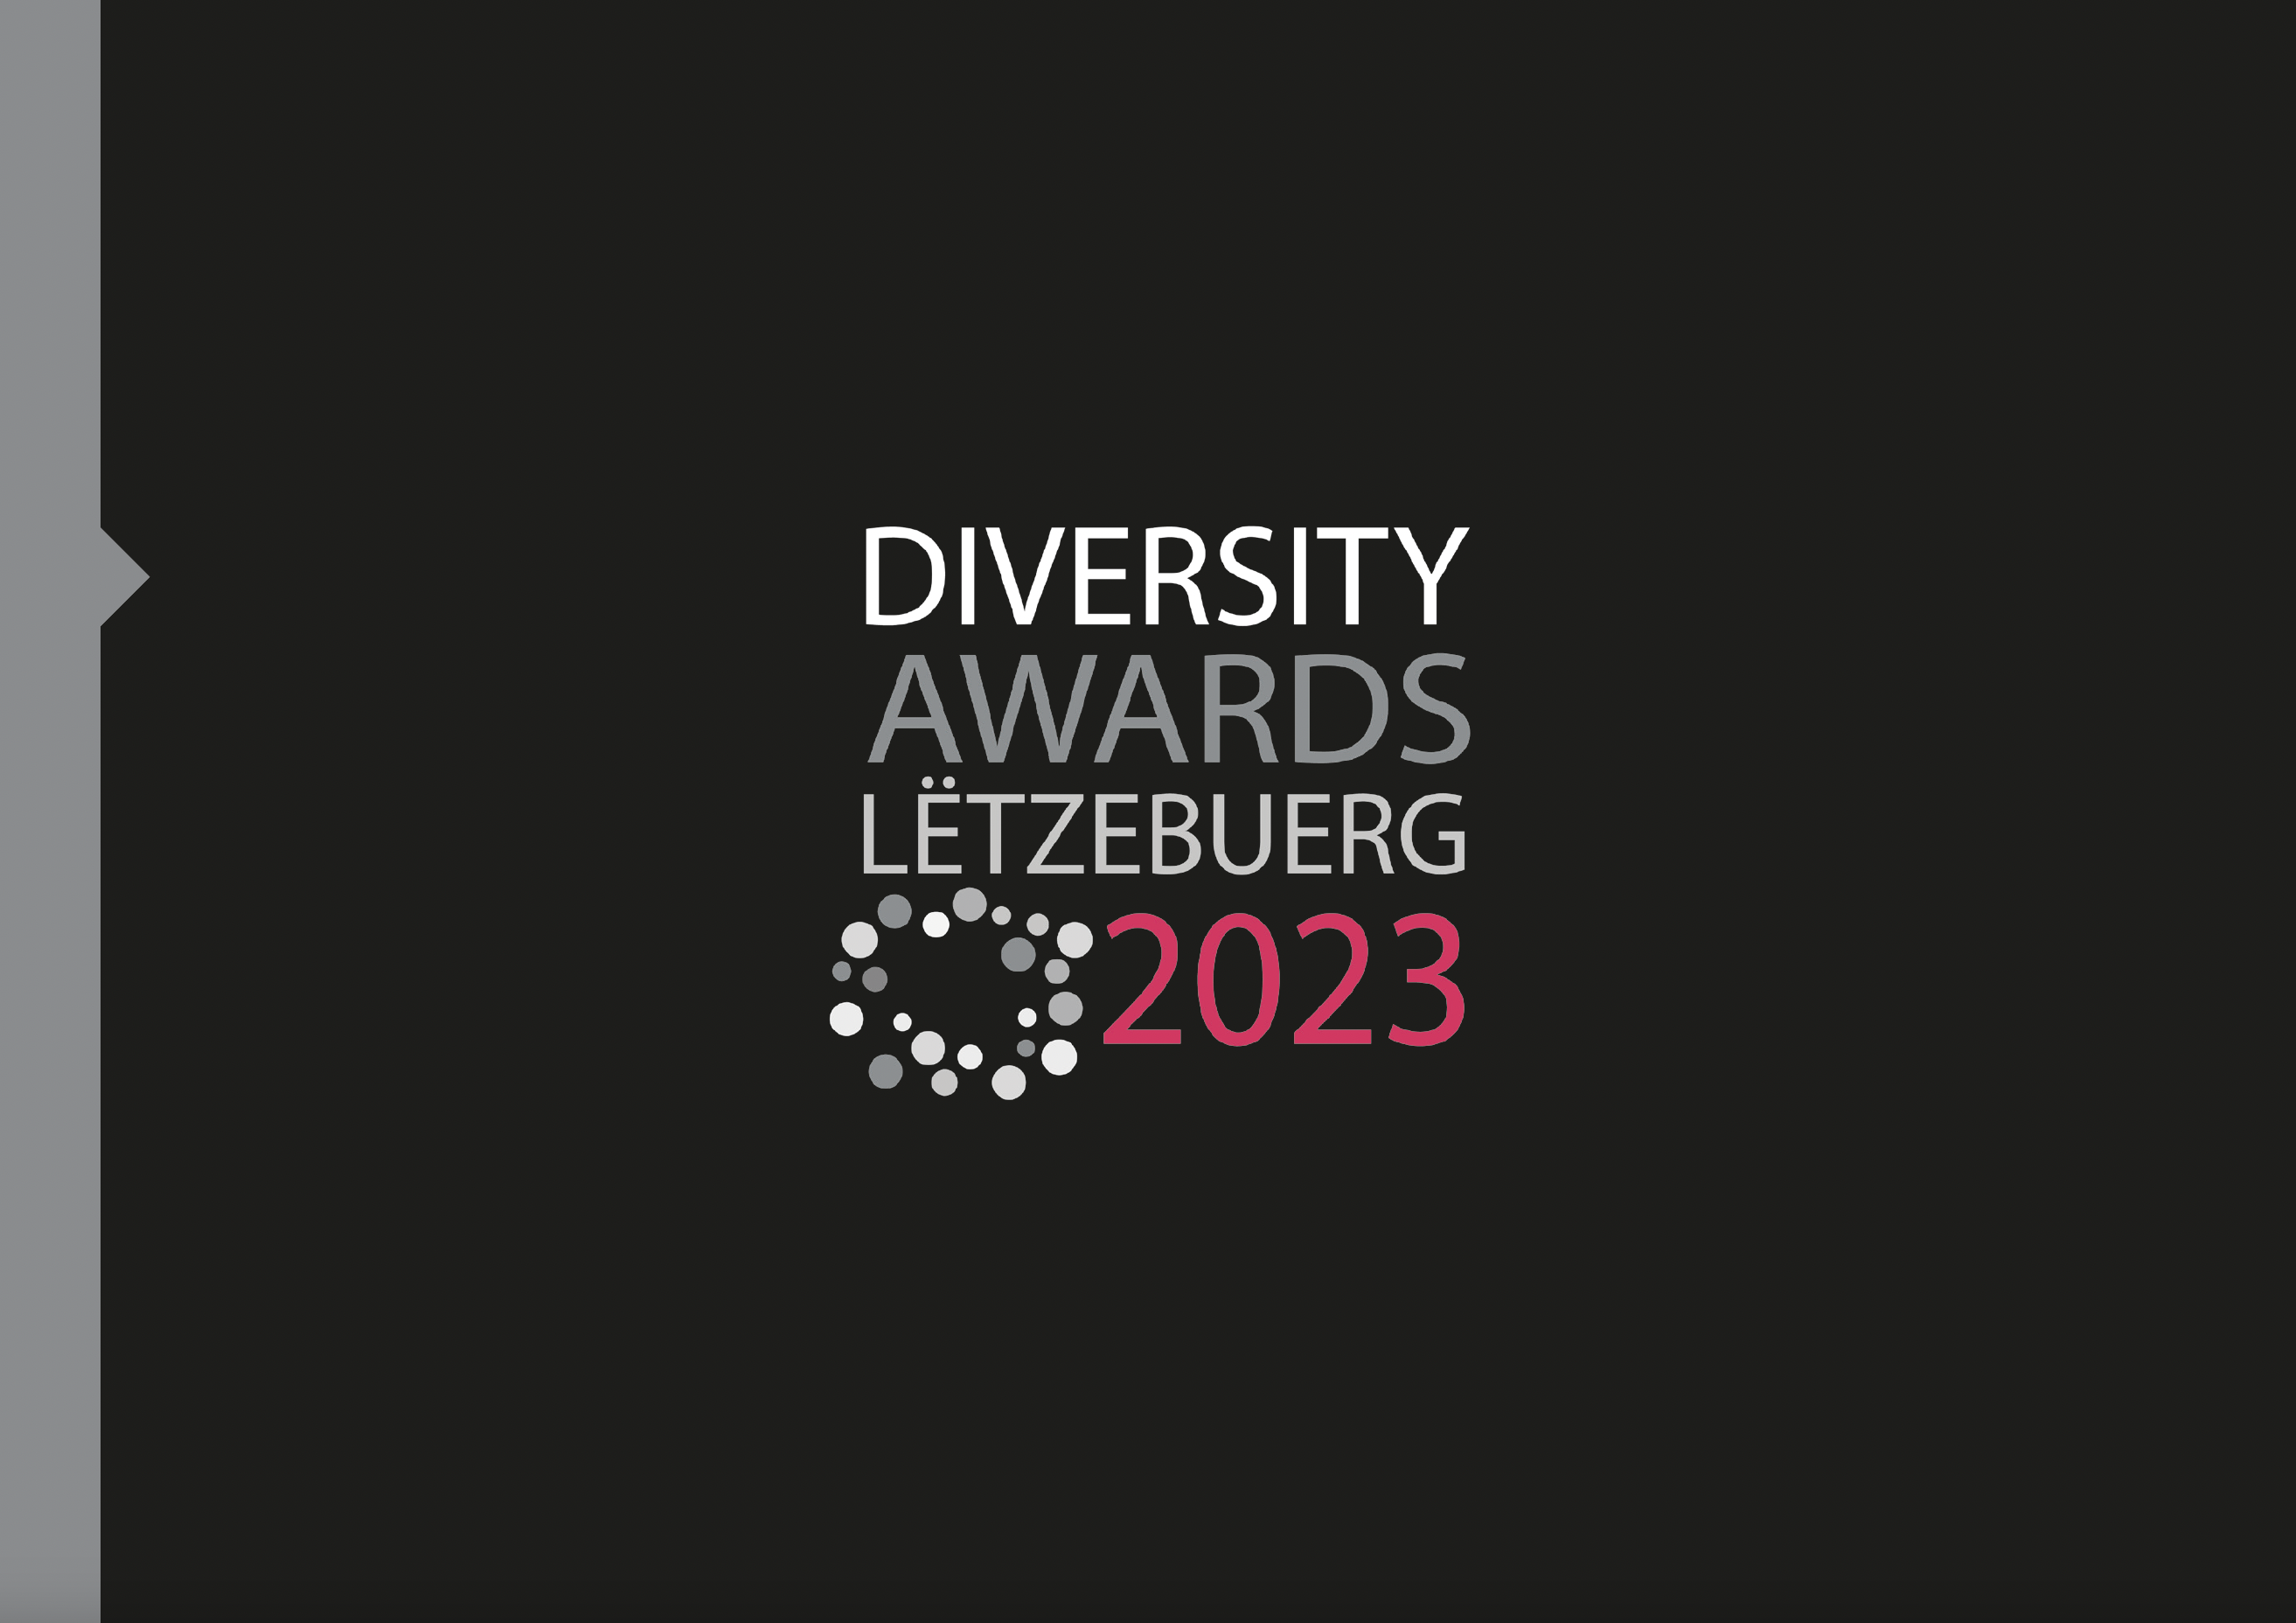 Diversity Awards Lëtzebuerg 2023 brochure